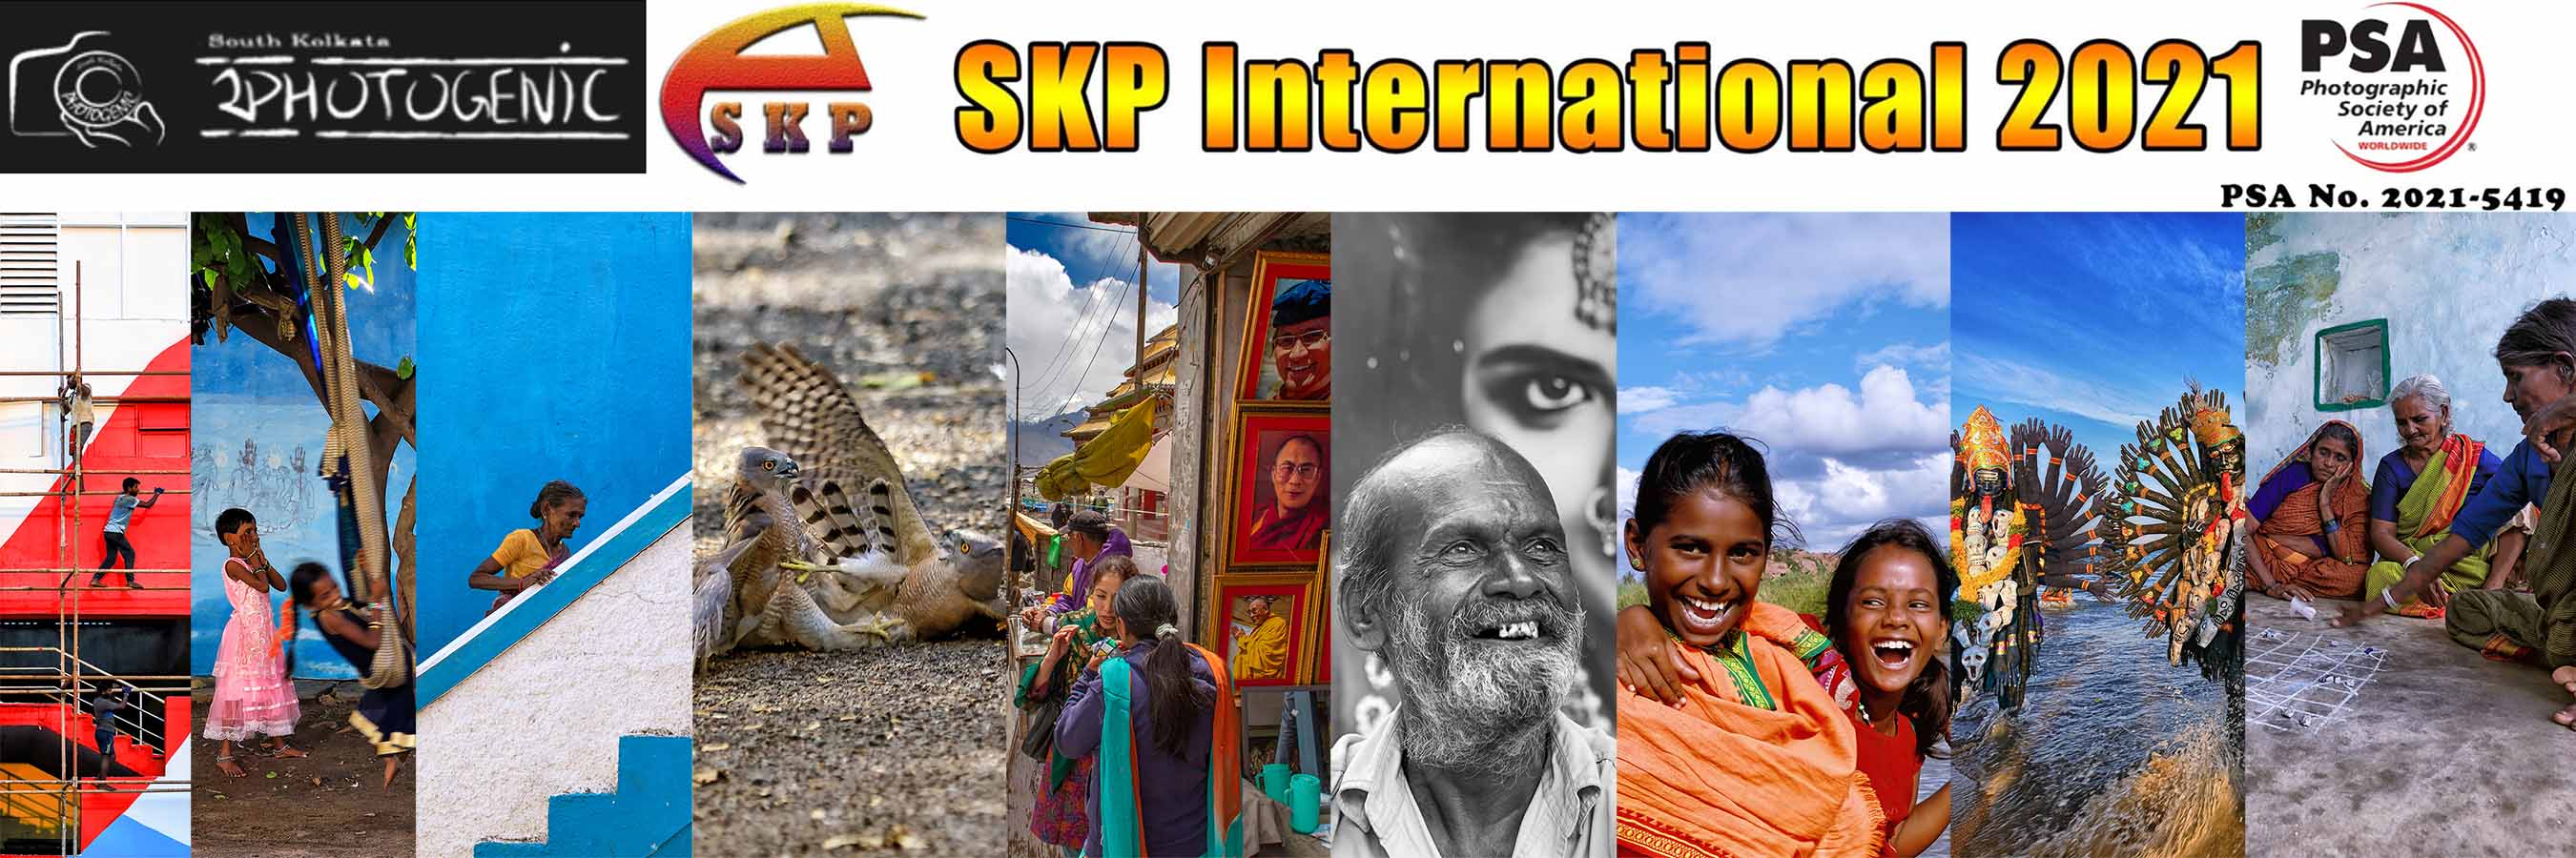 SKP International-2021